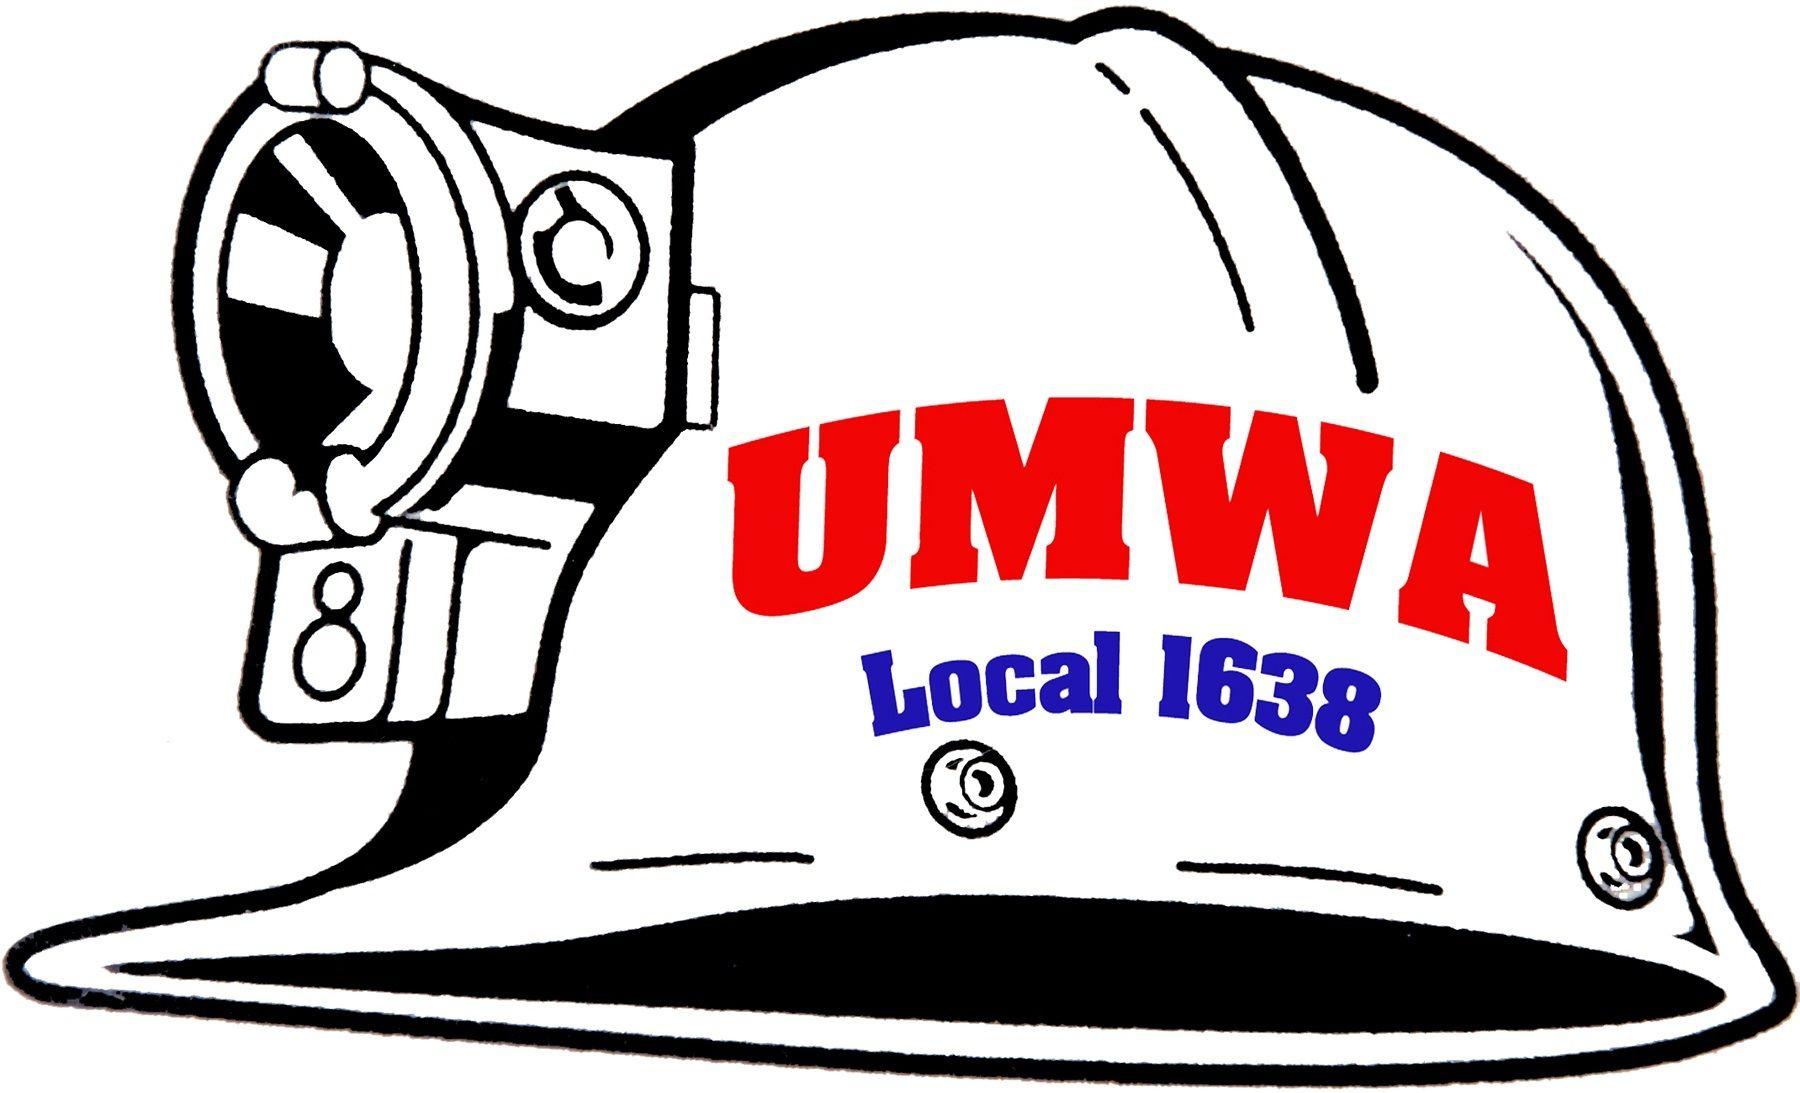 UMWA Logo - UMWA Local 1638 | Labor Unions/ Logos | Union logo, Coal miners ...